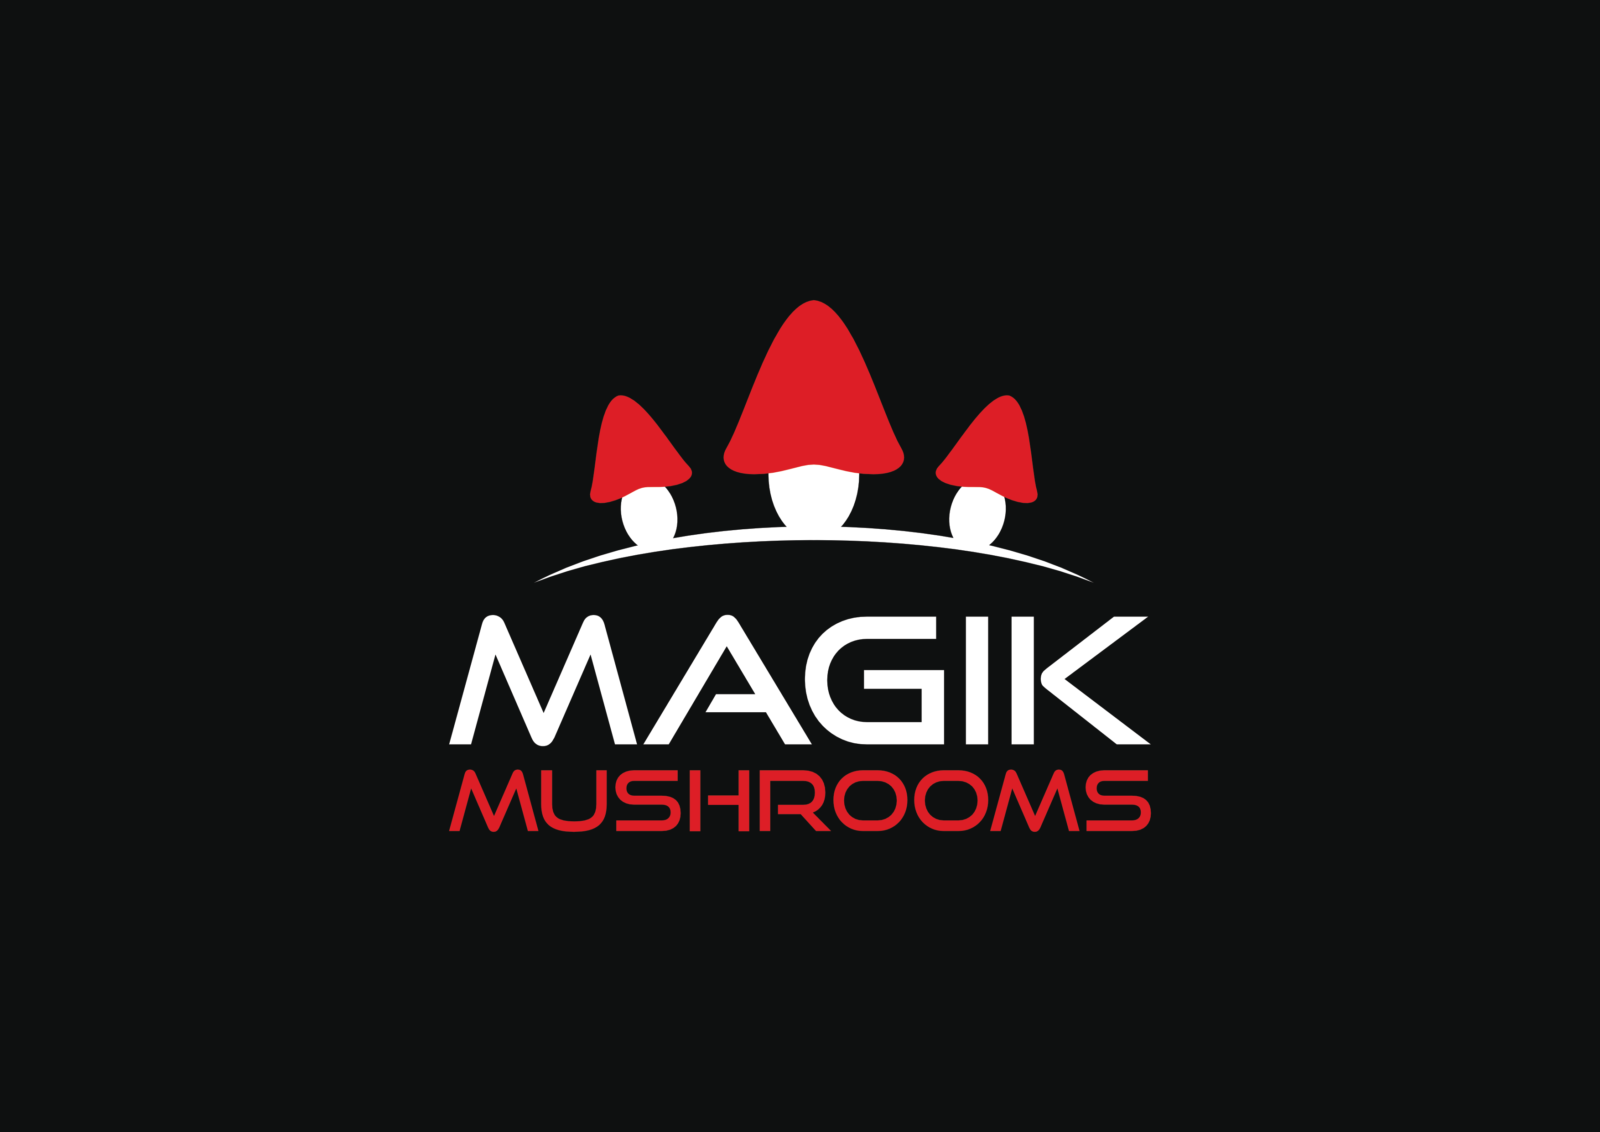 MagikMushrooms domain large logo